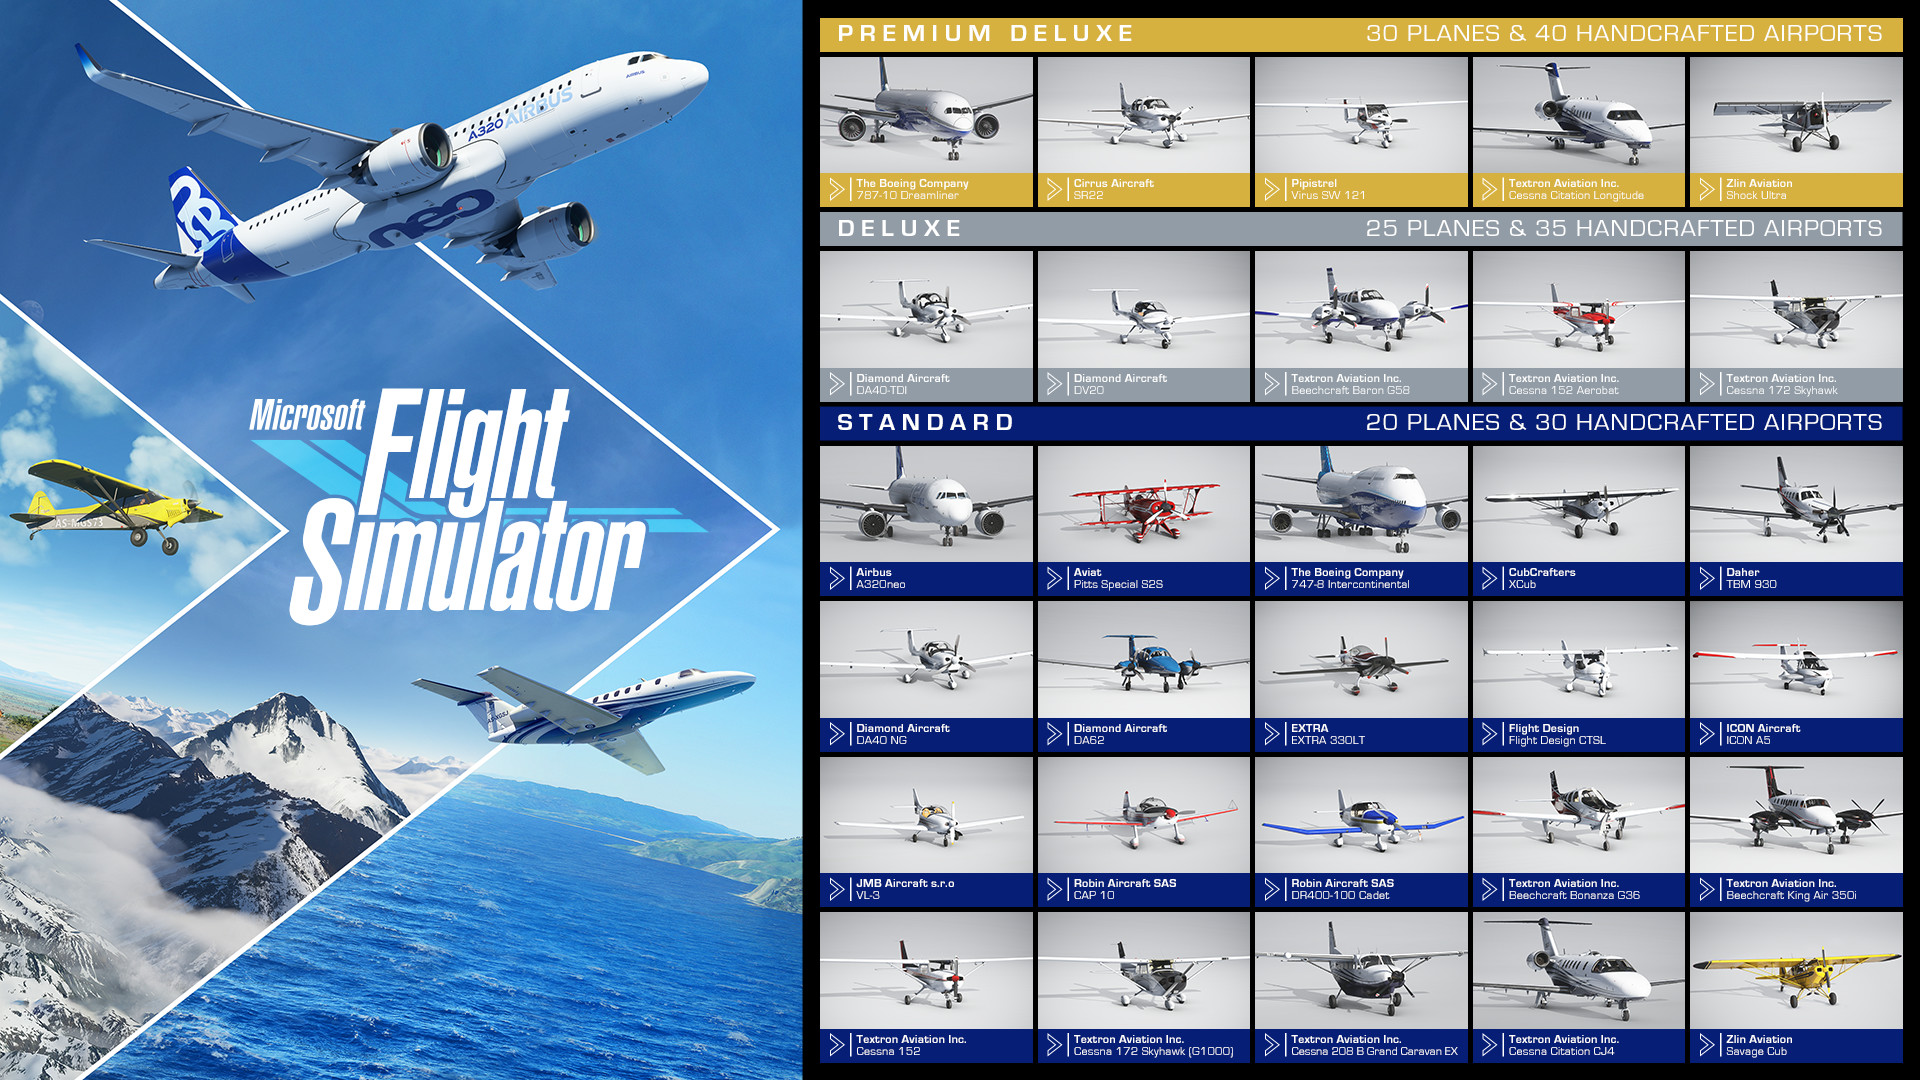 Microsoft Flight Simulator Premium Deluxe Game of the Year Edition EU Xbox Series X|S / Windows 10 CD Key $102.81